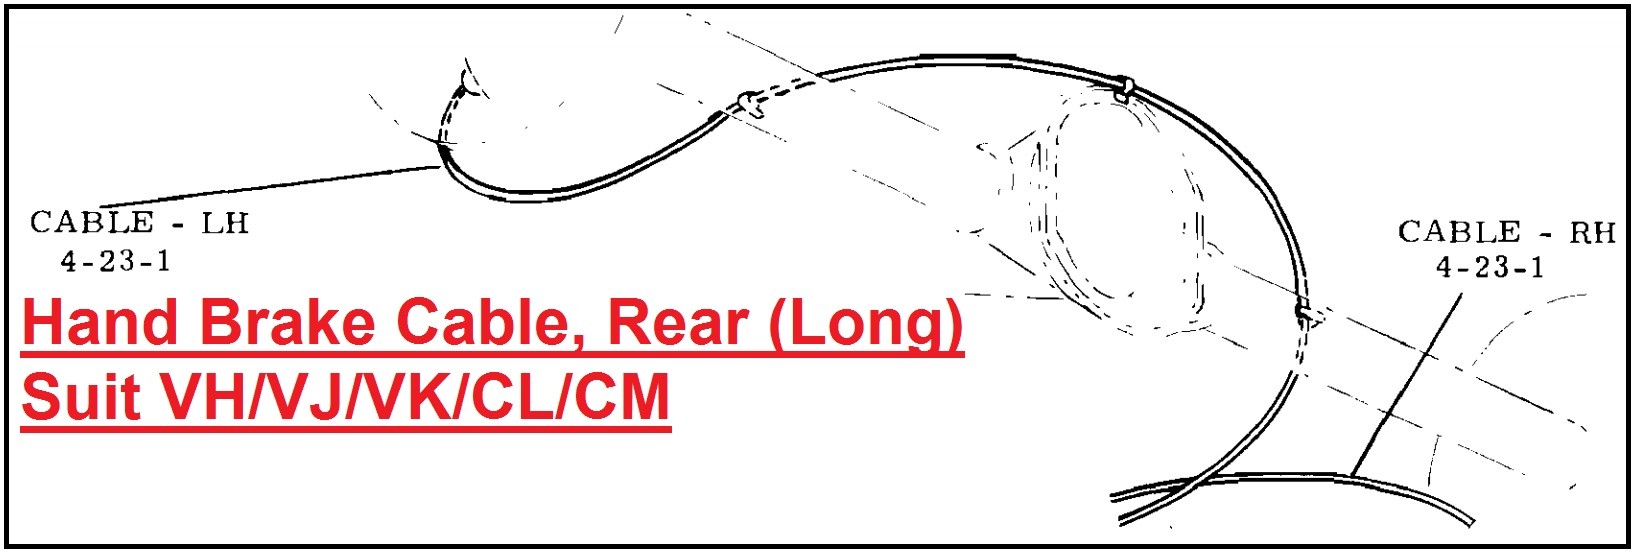 Hand Brake Cable, Rear (Long) : suit VH/VJ/VK/CL/CM Including Charger